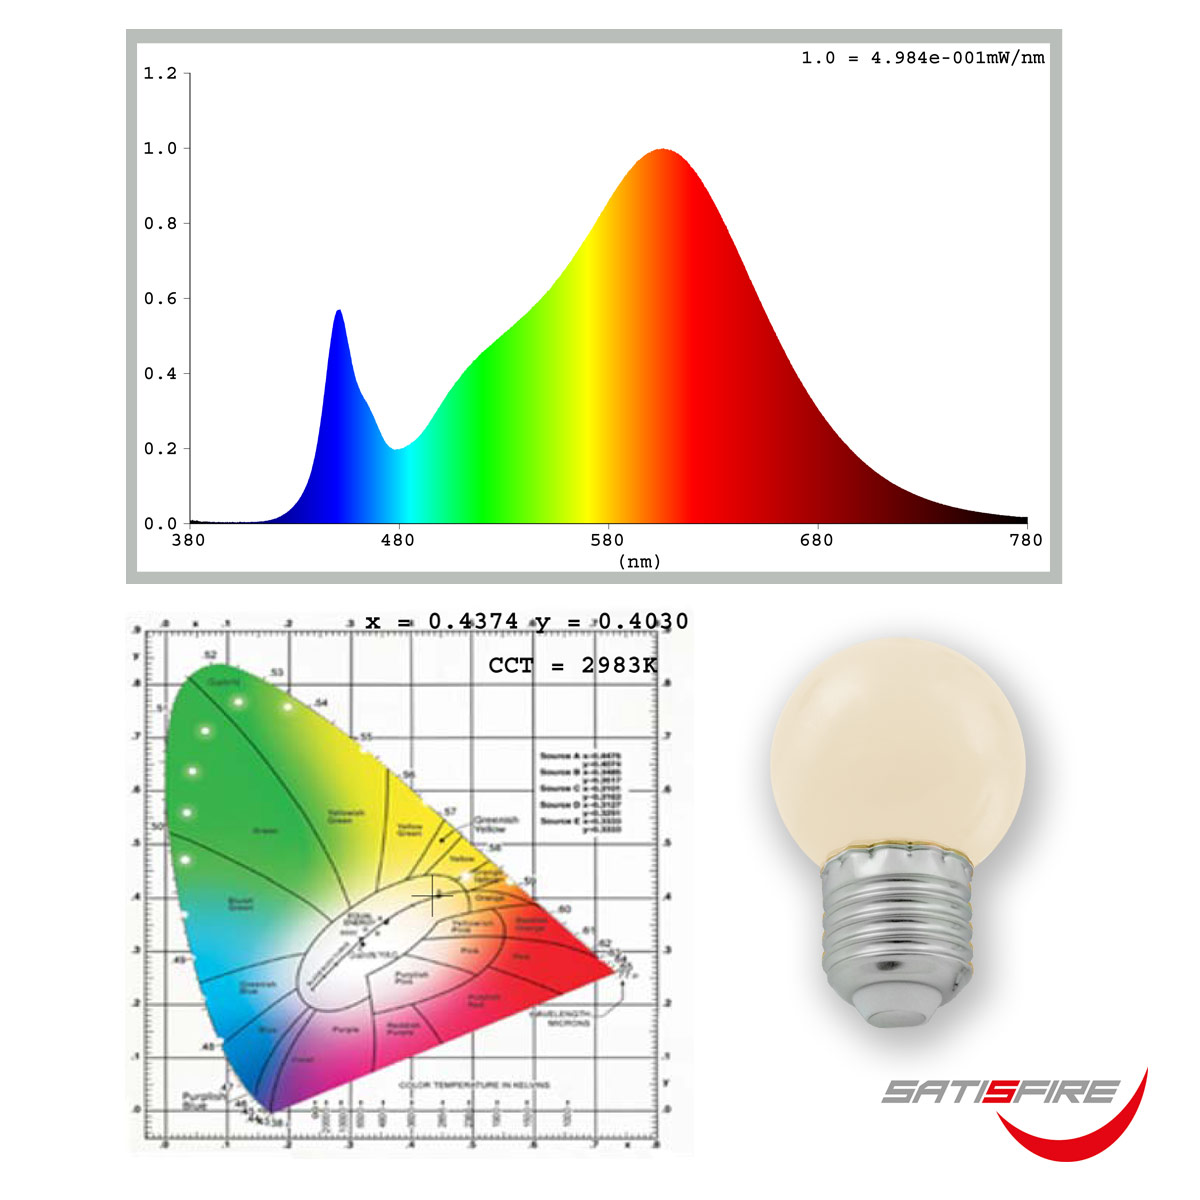 LED Leuchtmittel G45 - warmweiß 2700K - E27 - 1W | SATISFIRE